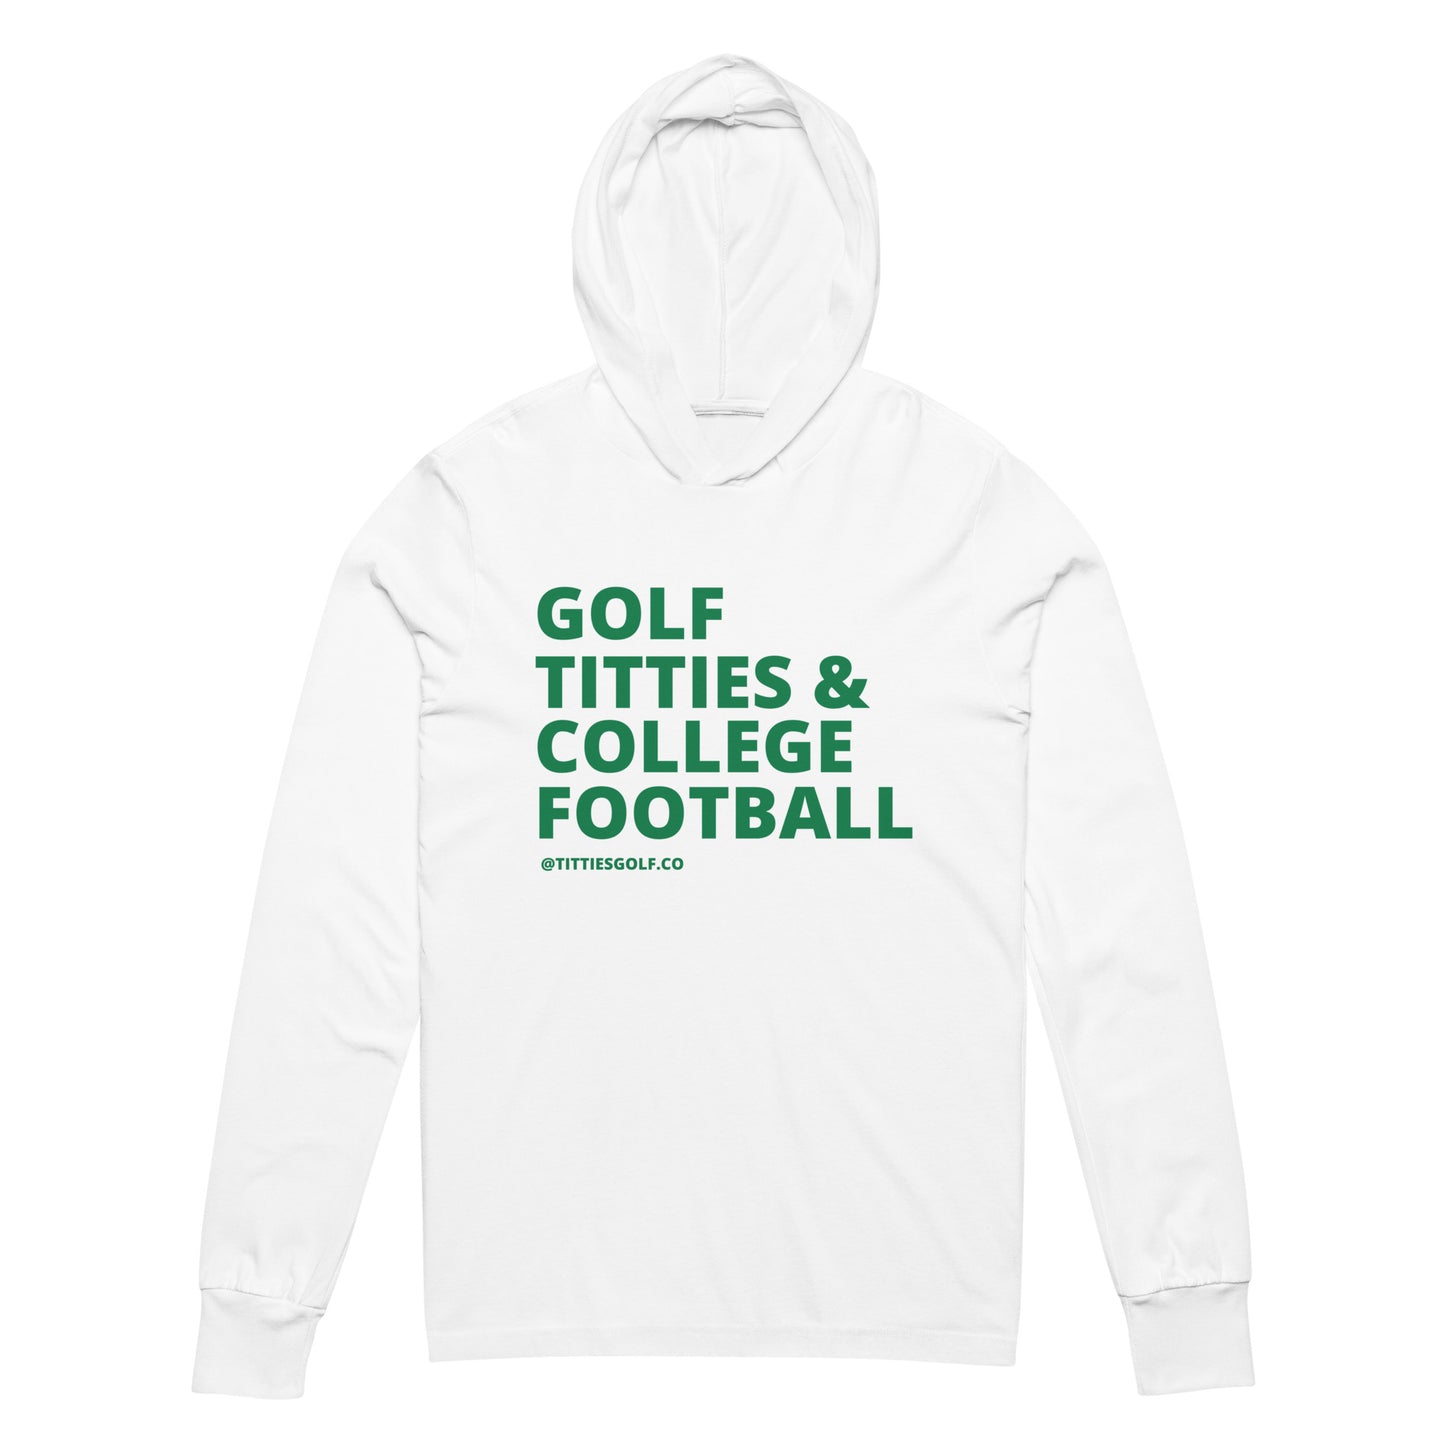 Golf, Titties & College Football Hooded Long-Sleeve T-Shirt(NEW)